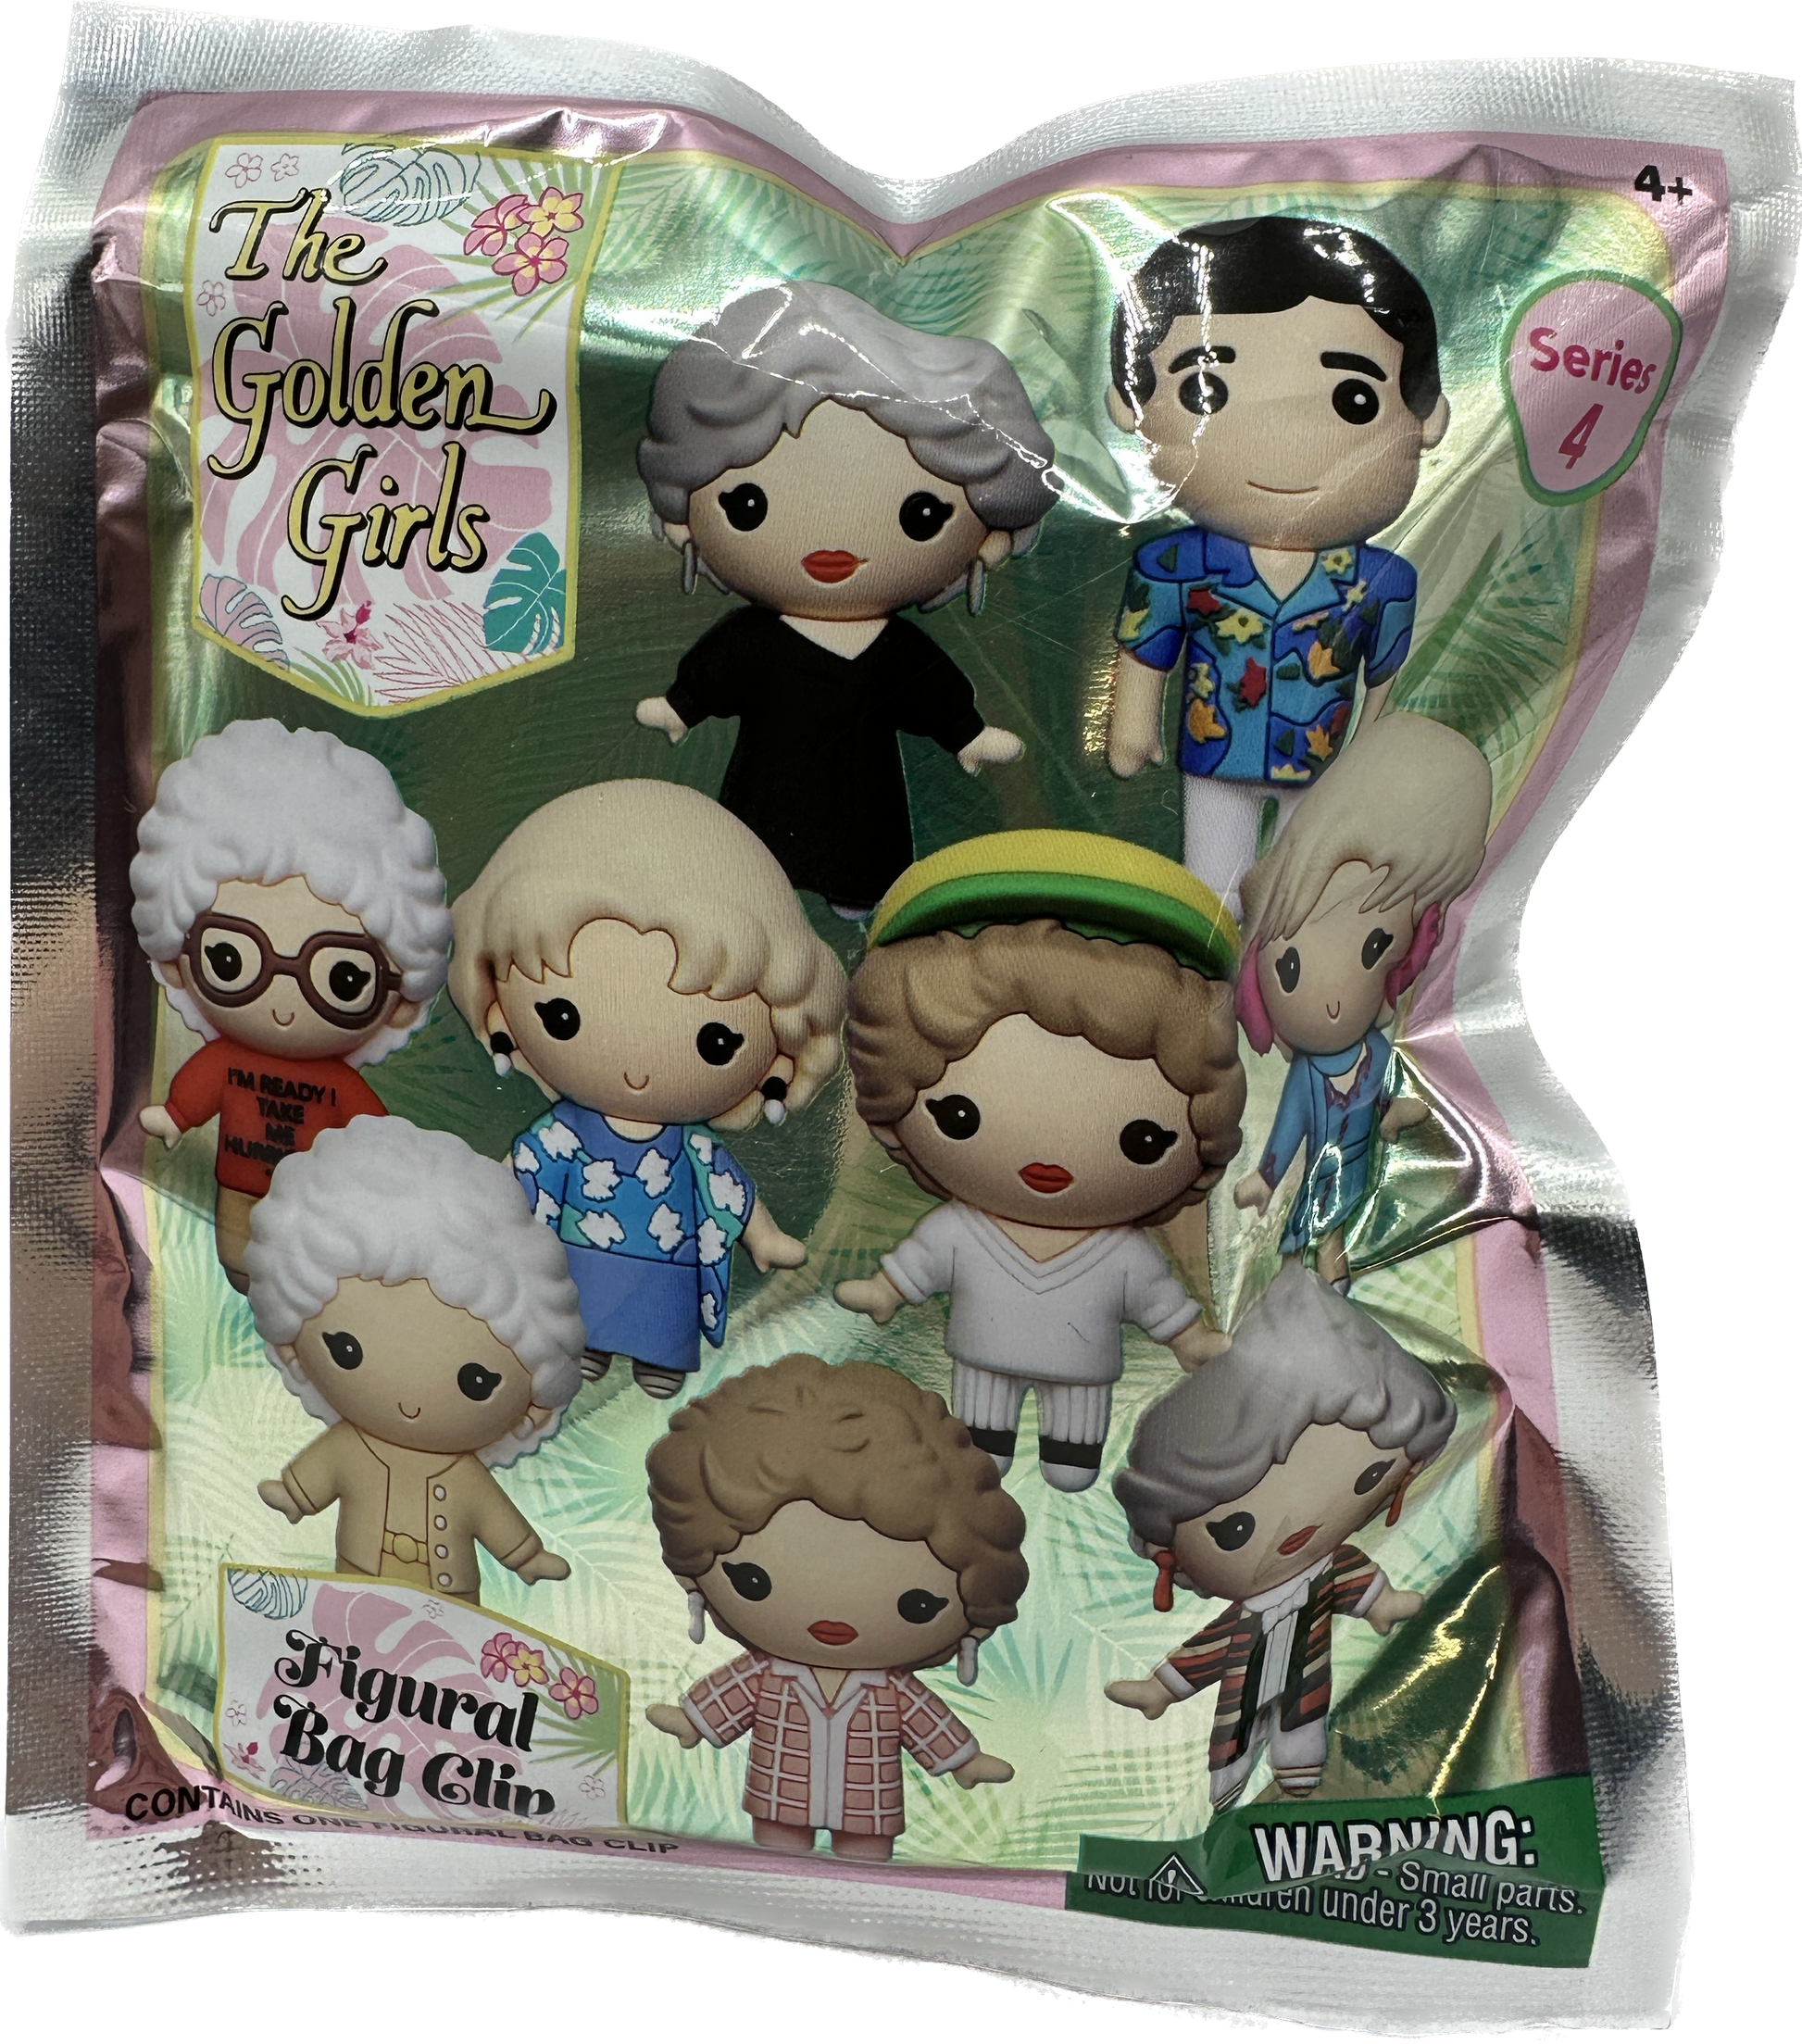 Golden Girls Figural Bag Clip Series 4